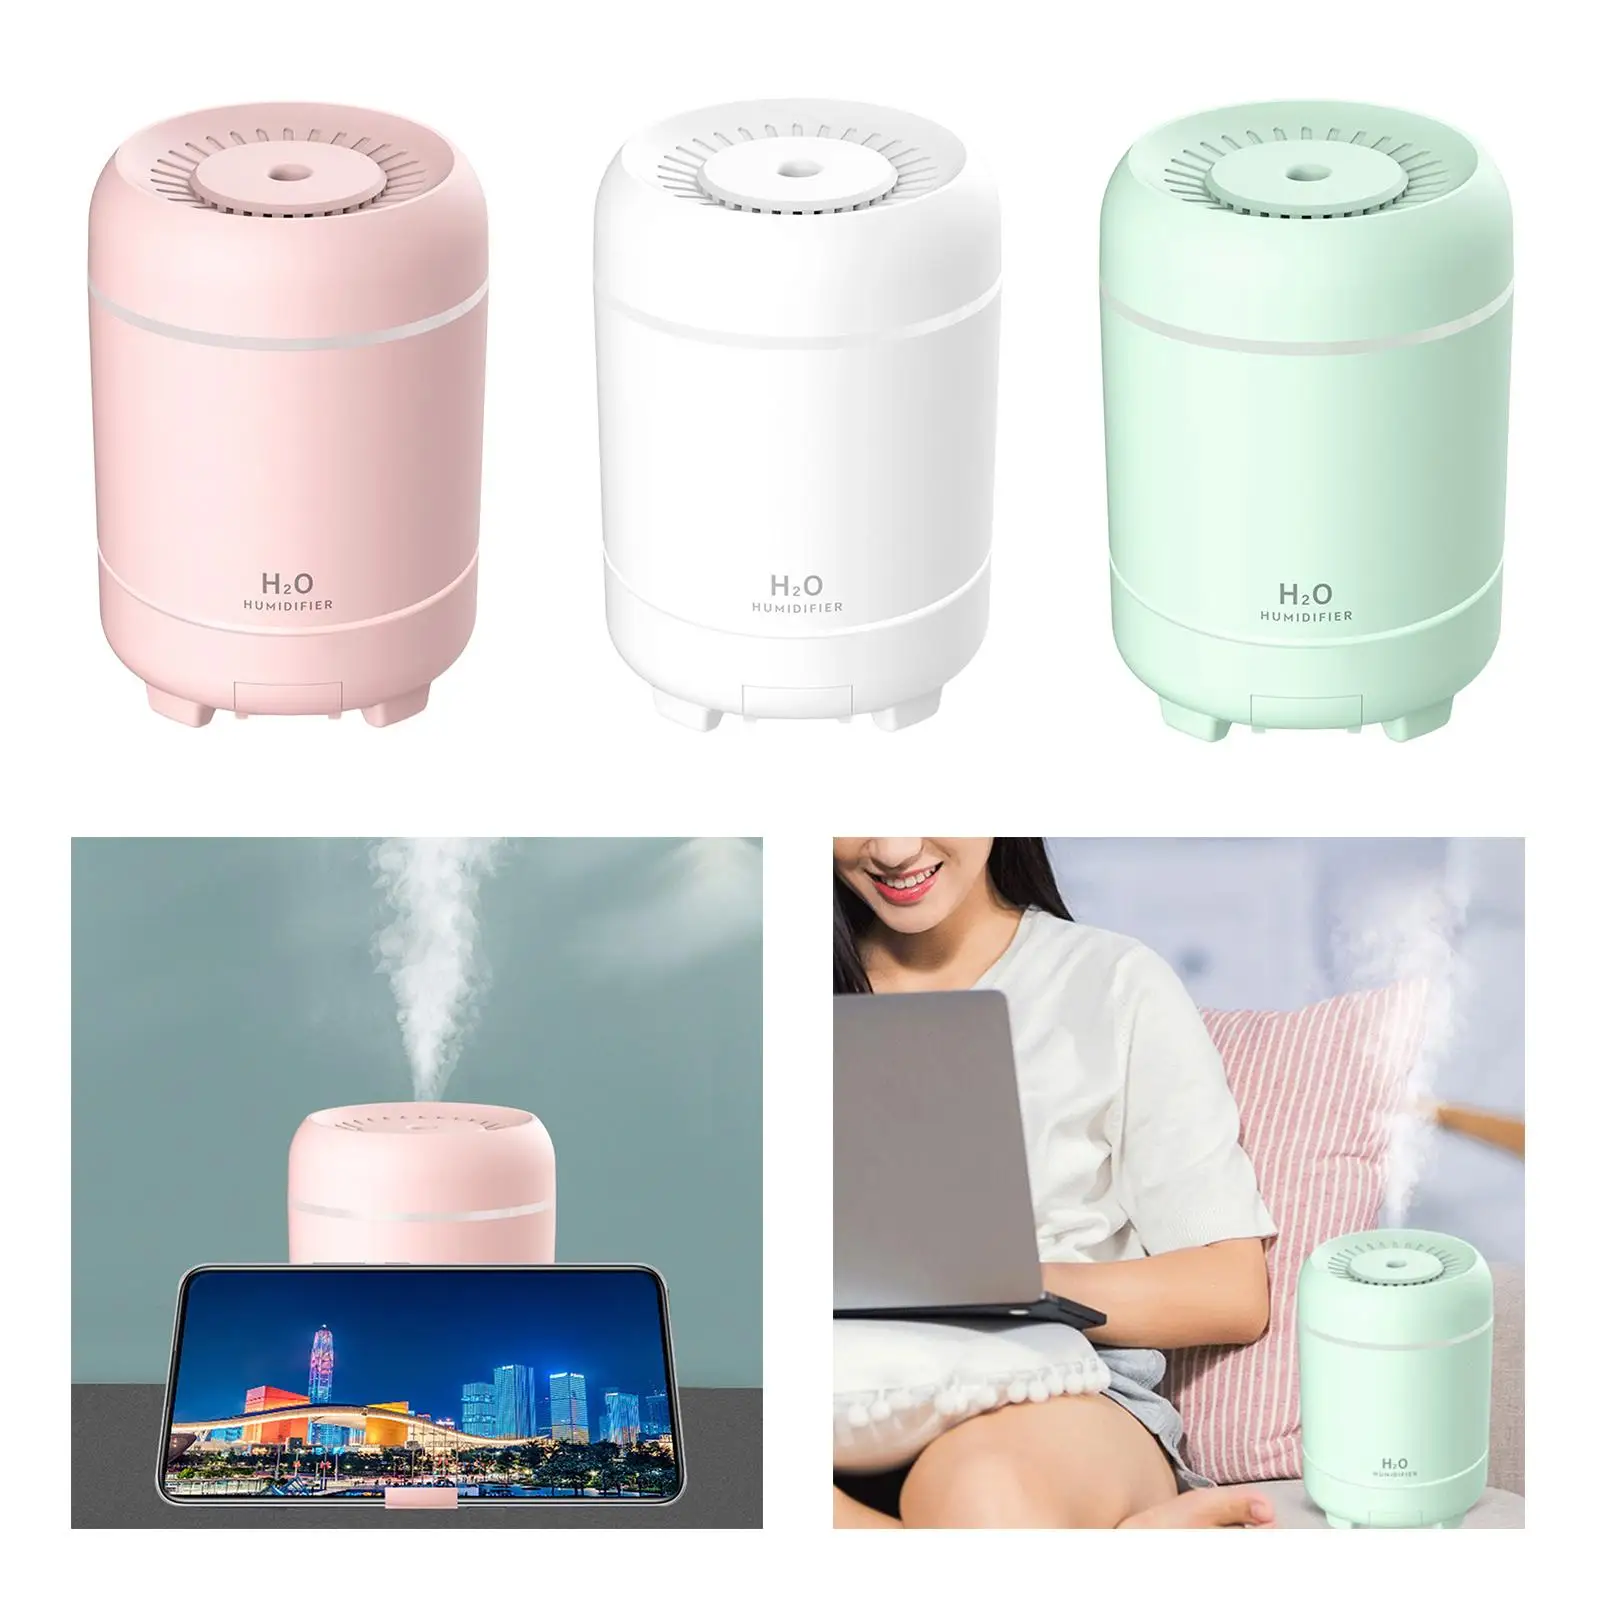 

300ML Car Humidifier Diffuser for Bedroom Desktop USB Mini Air Humidifier Aroma Oil Diffuser for Home Office Car Frangrance